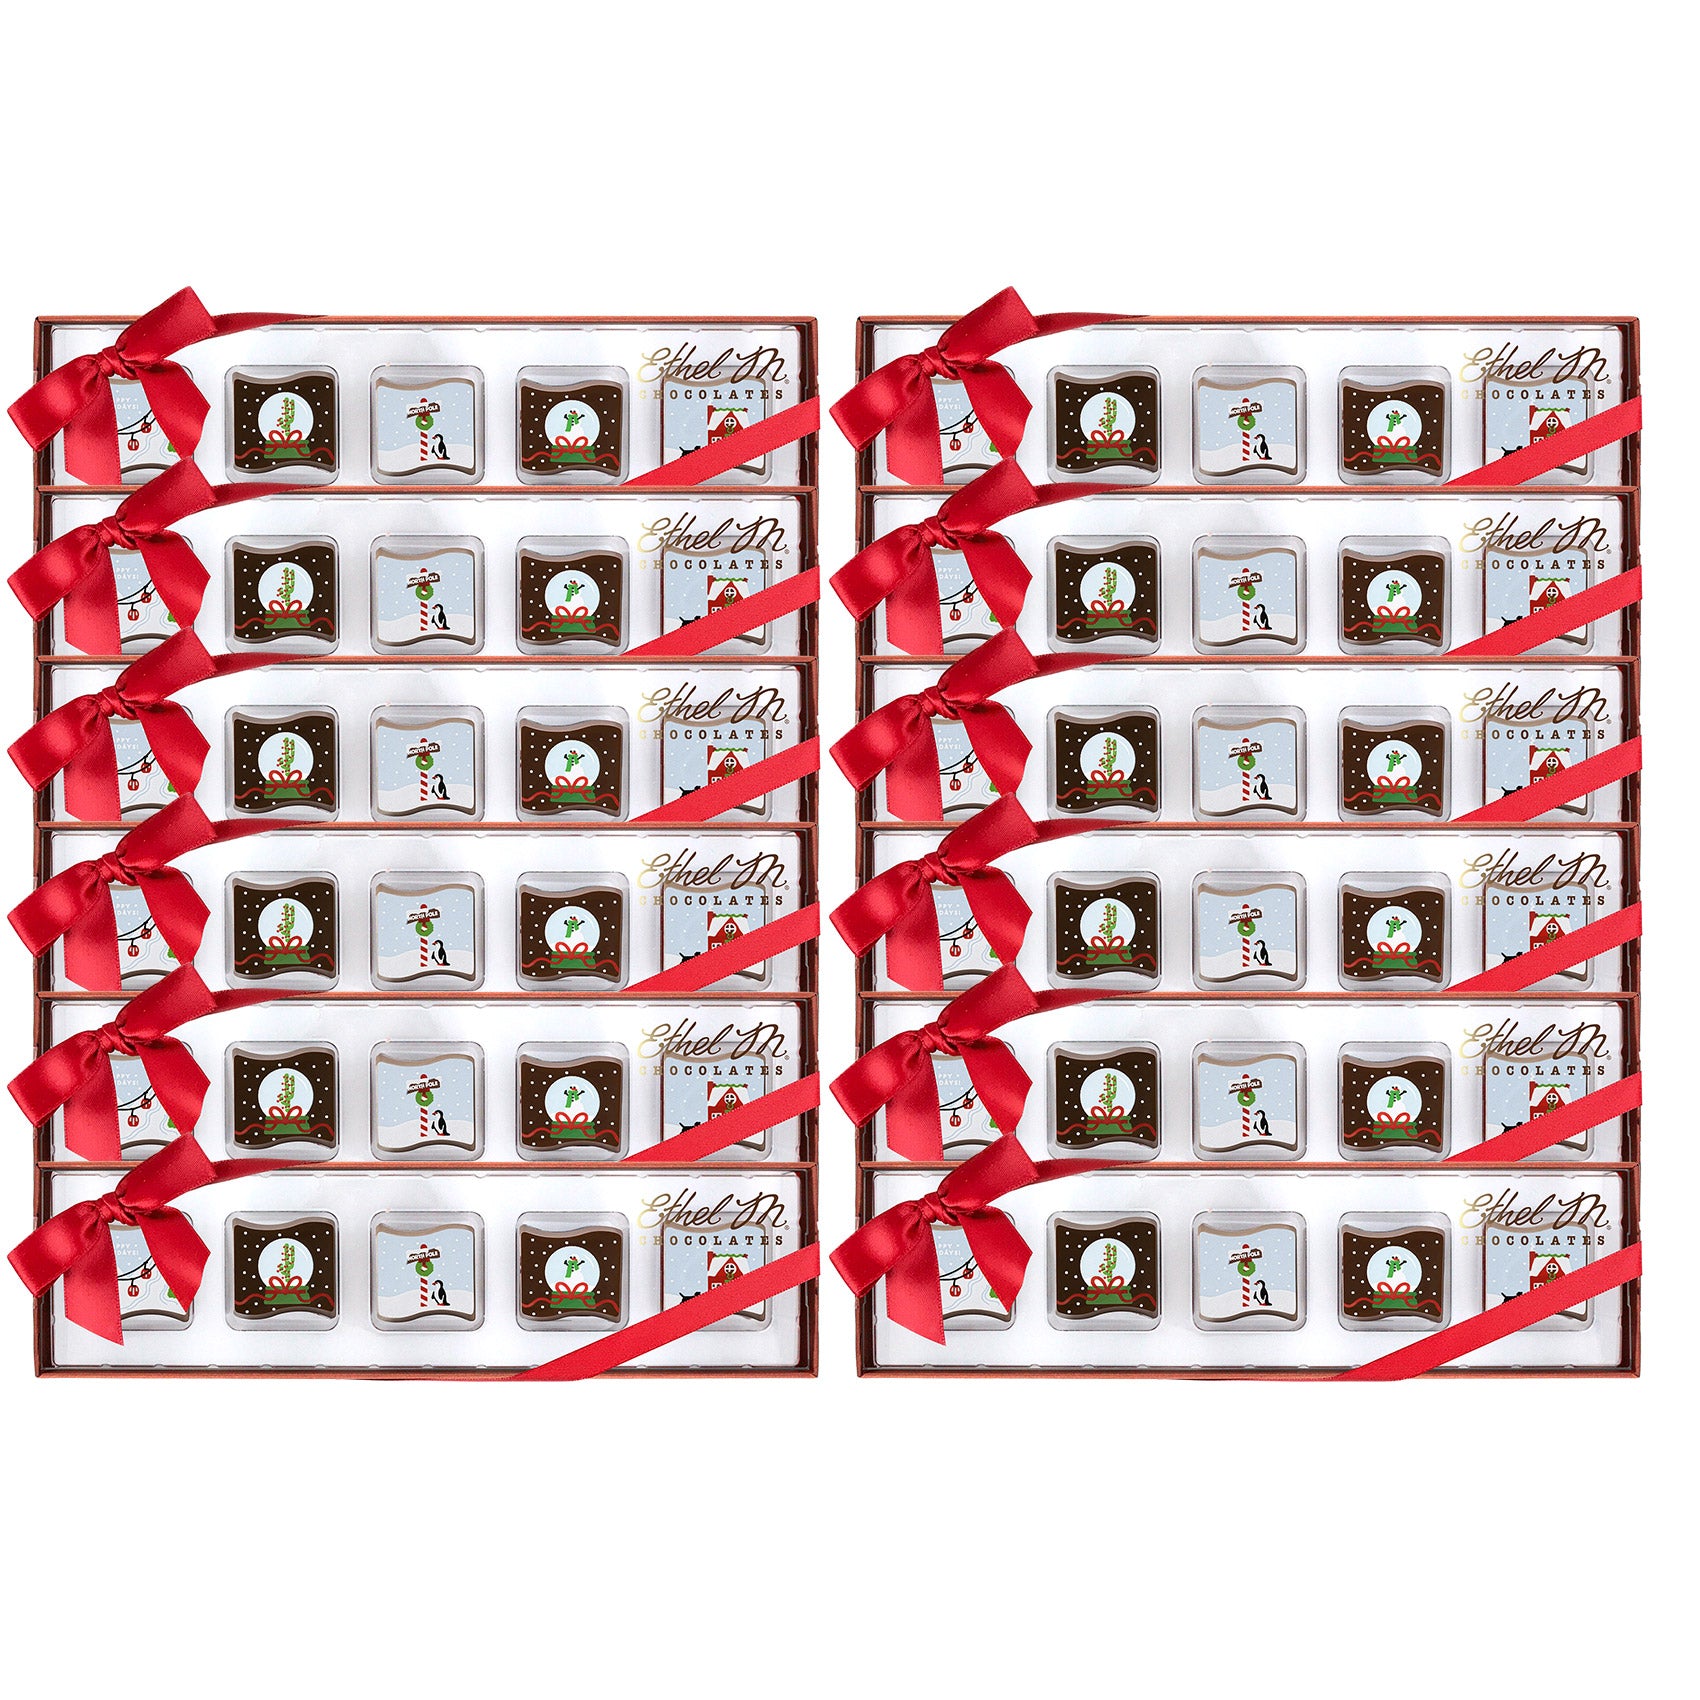 Ethel M Chocolates Holiday Creamy Caramels Sampler, 5-Piece Holiday Gift Set of 12 Boxes